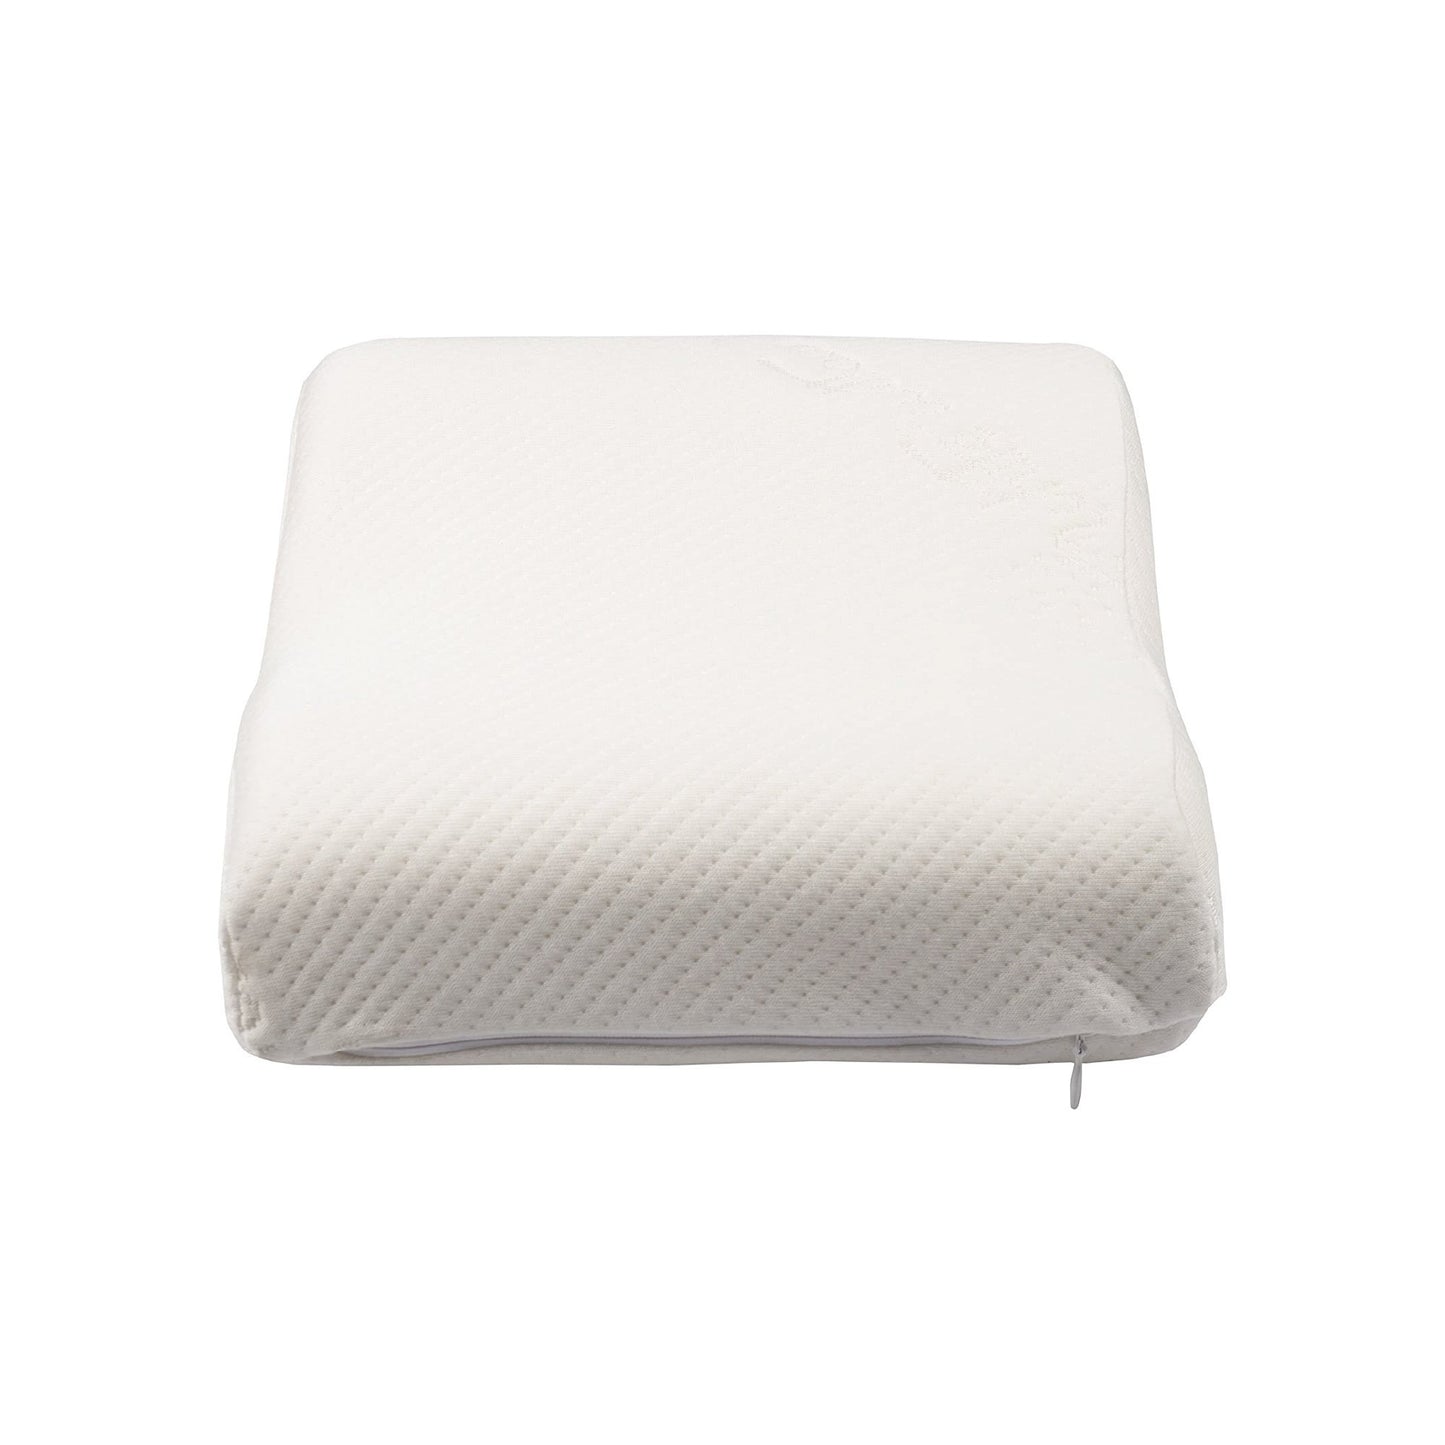 Notus - Memory foam Small Contour Travel Pillow - Medium Firm - The White Willow